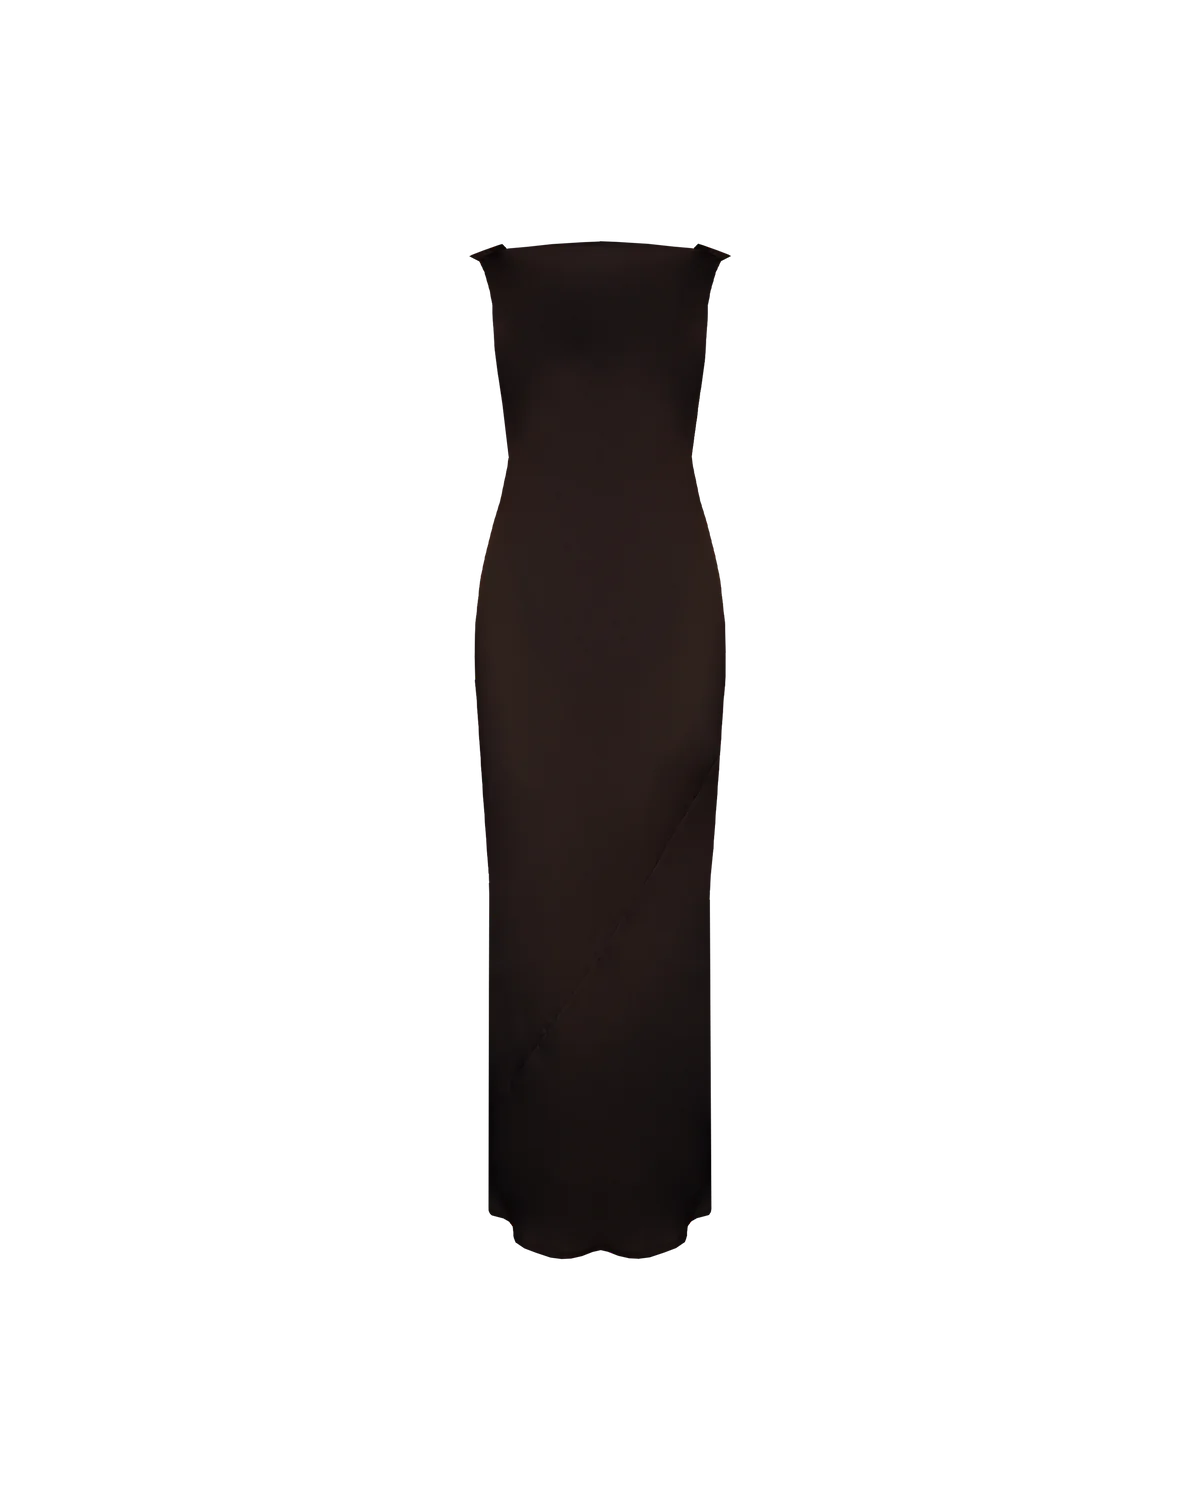 Firebird Cowl Gown (Espresso)